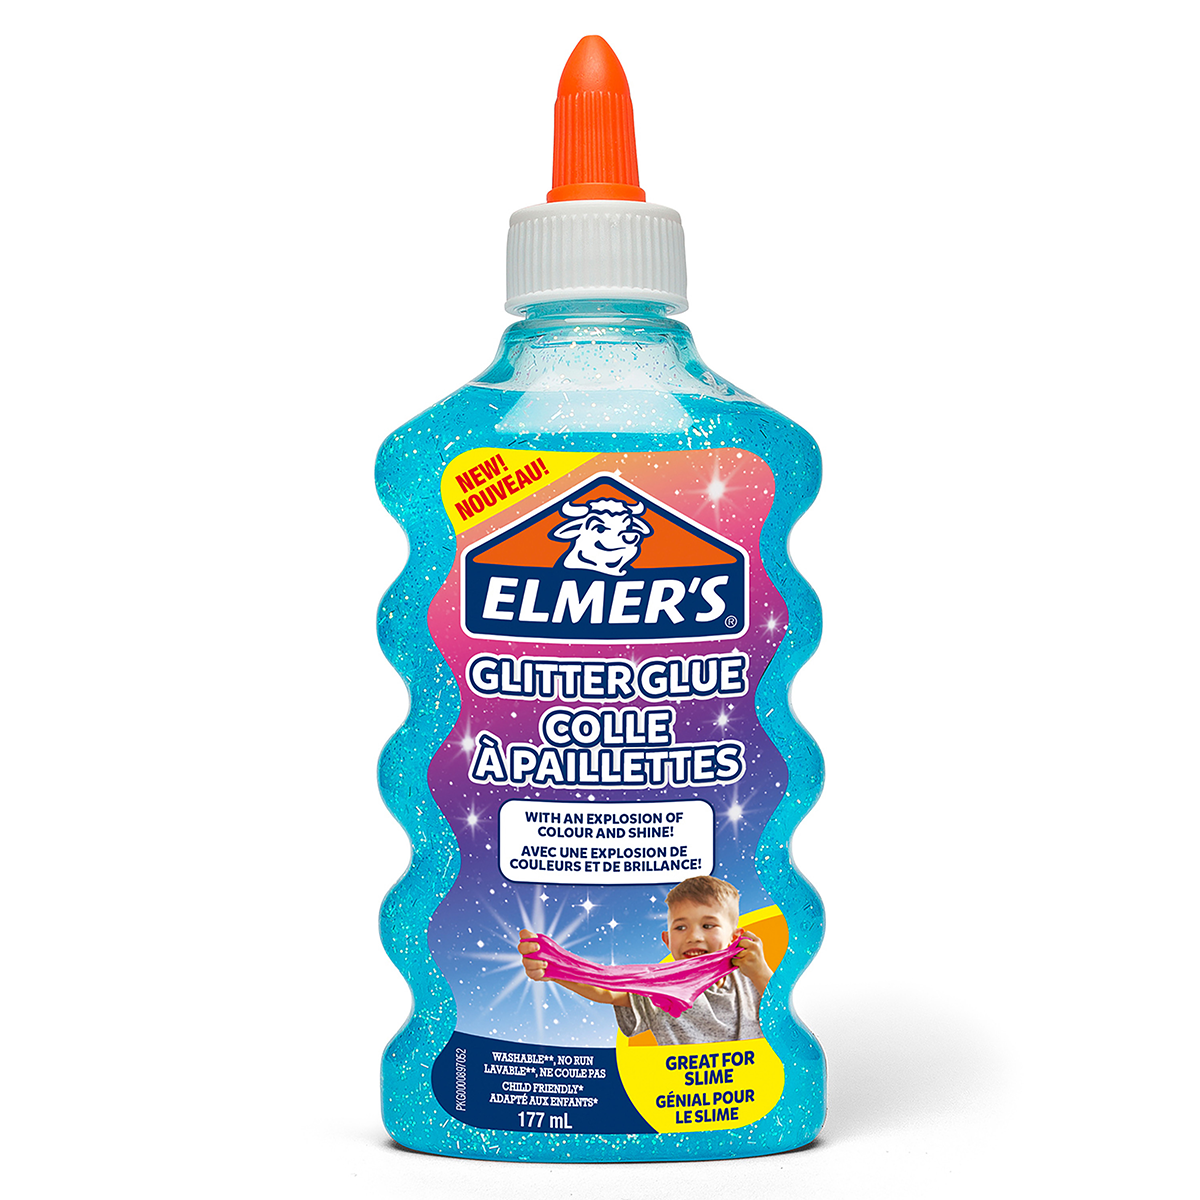 Elmer's Craft Sprays for sale